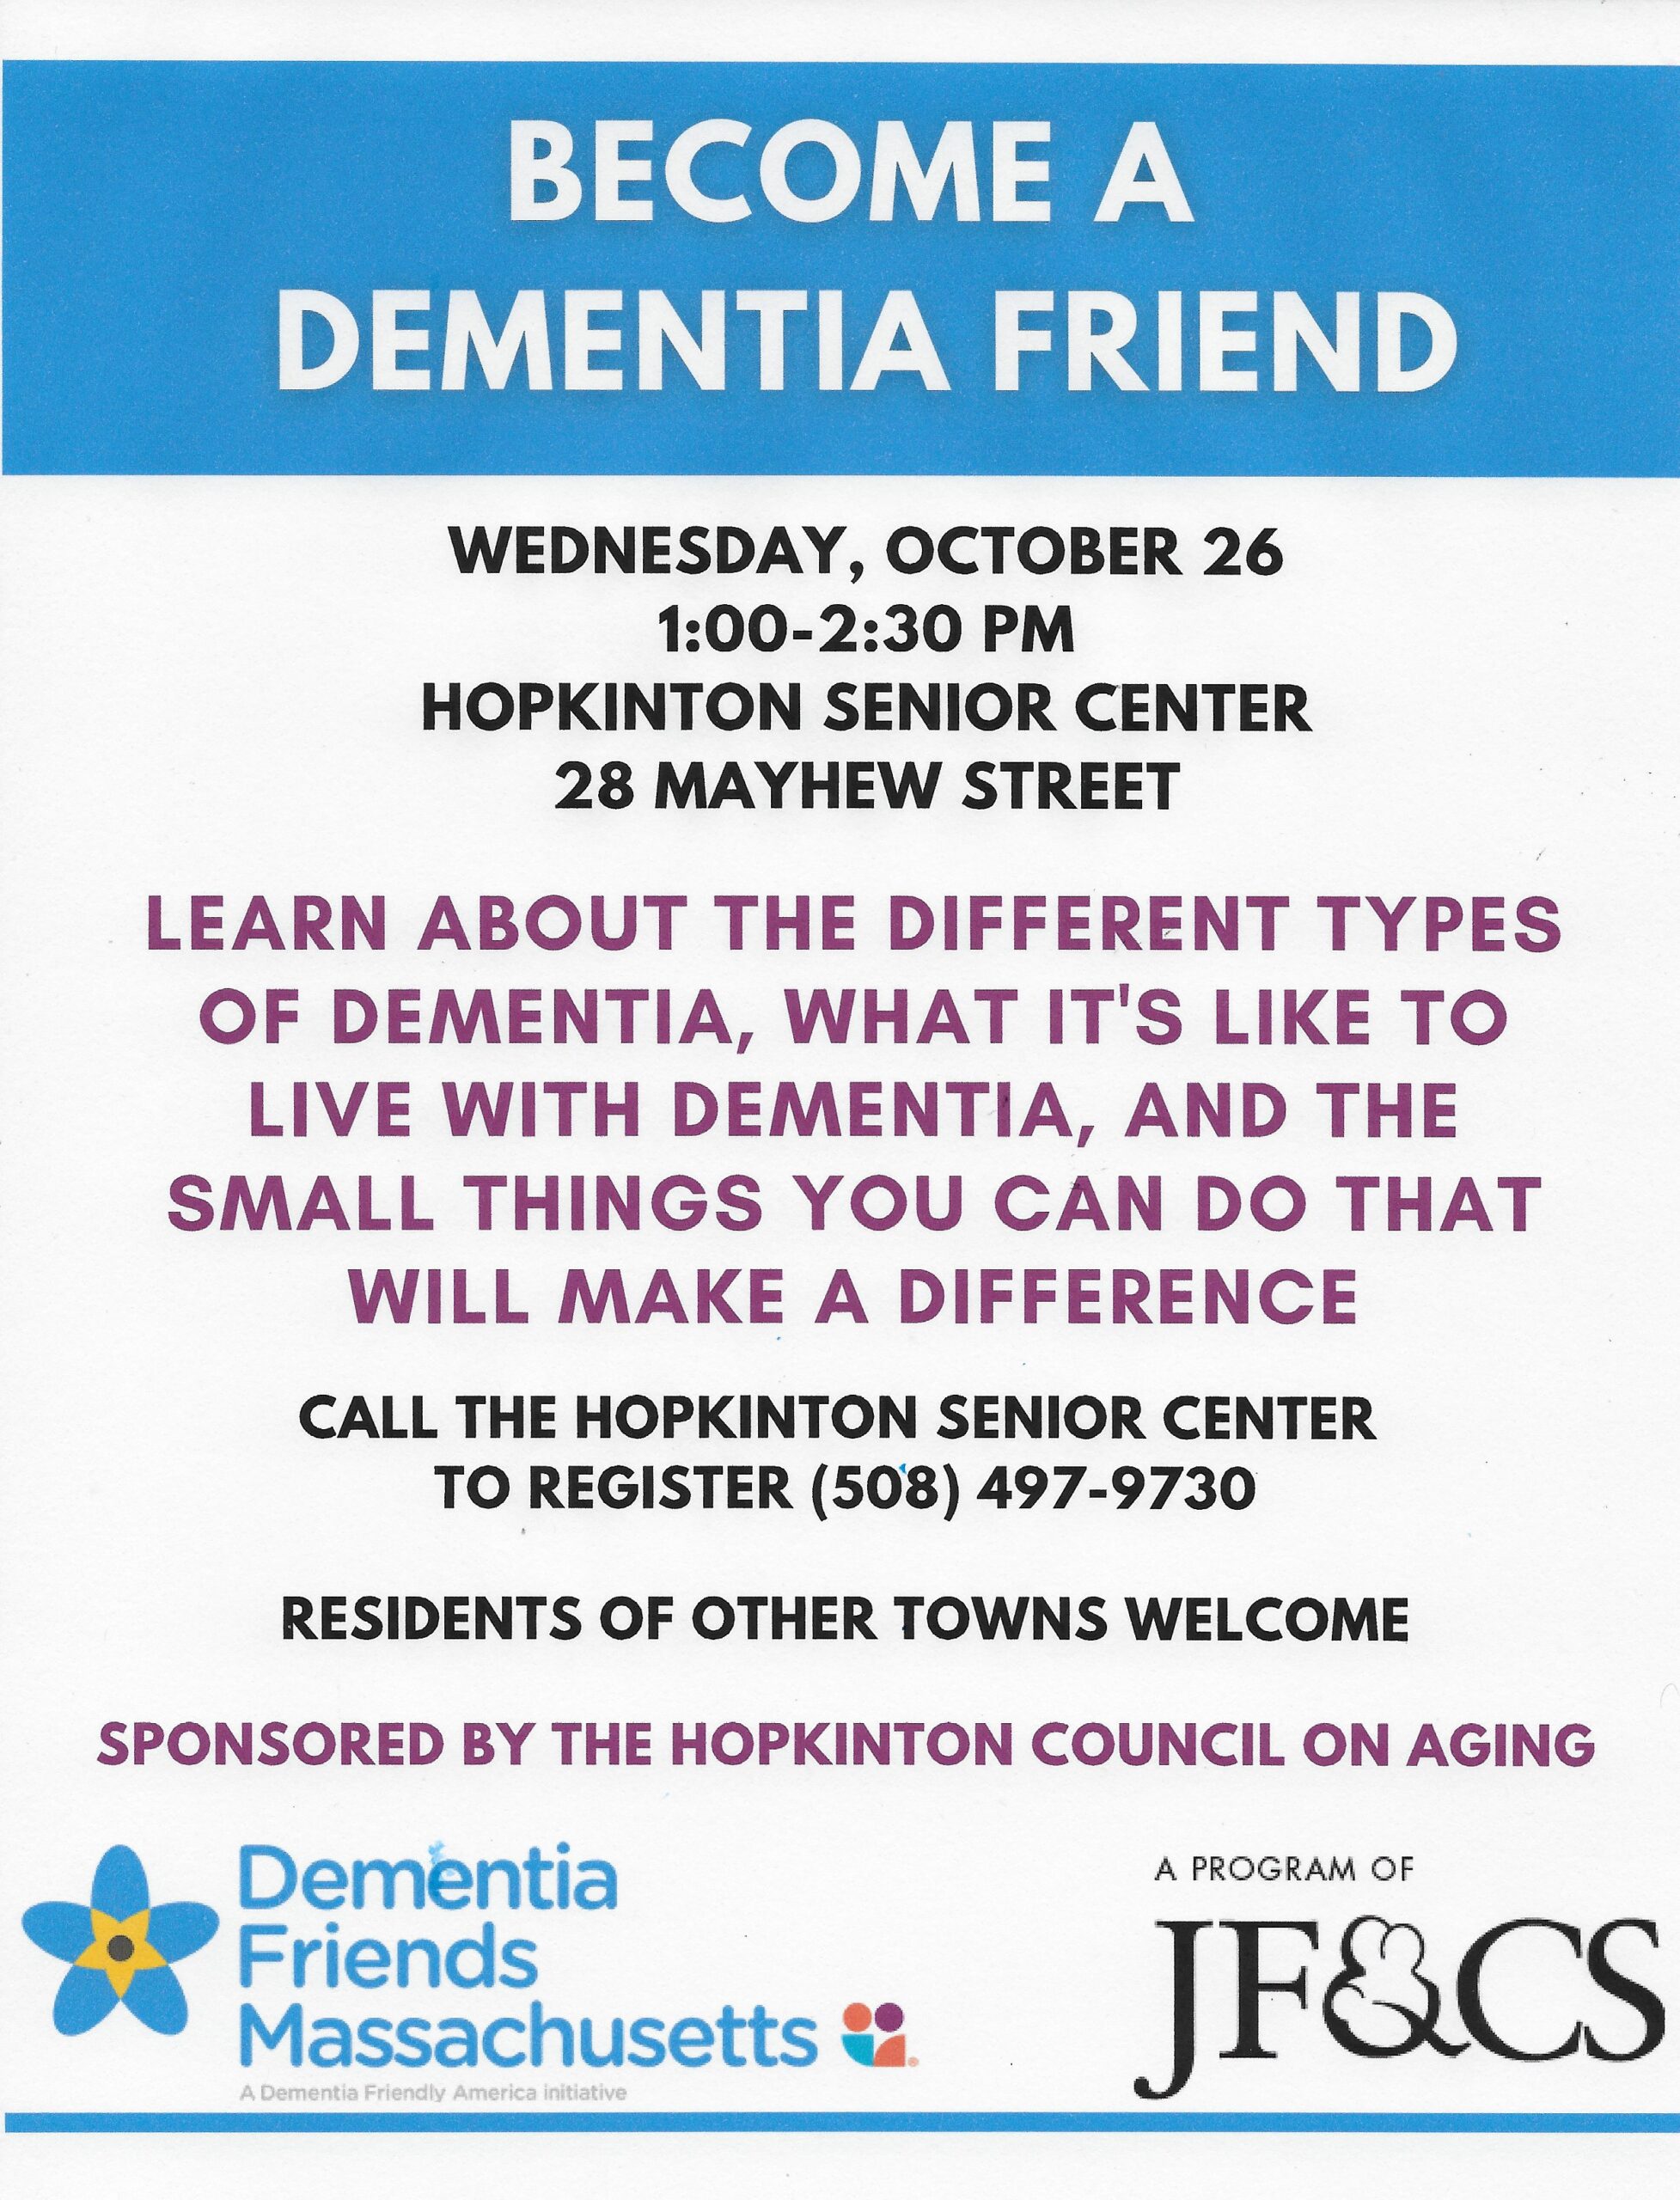 Dementia Friends information session Oct. 26